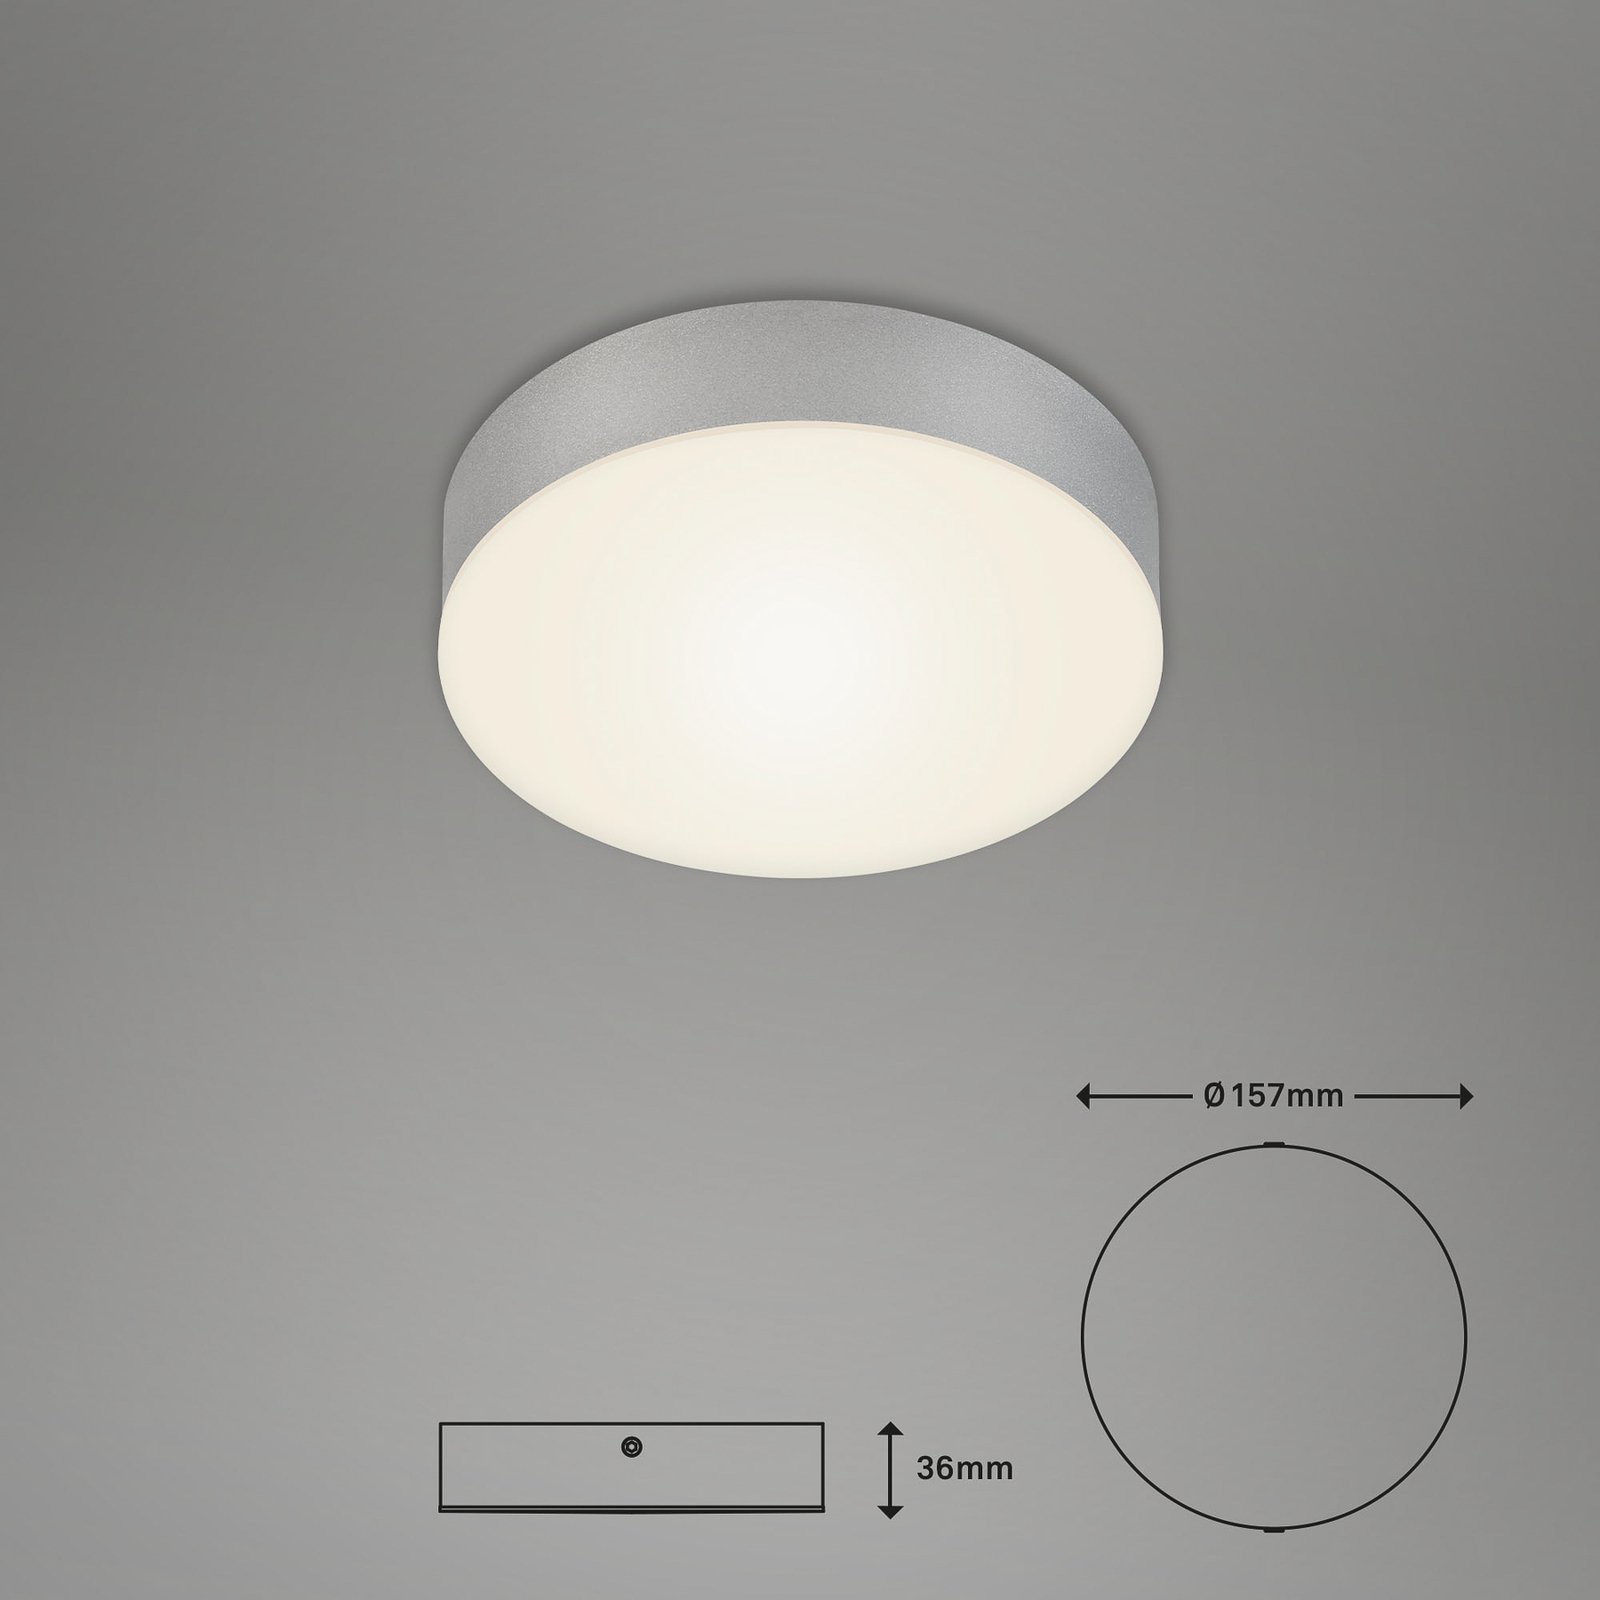 Flame LED ceiling light, Ø 15.7 cm, silver